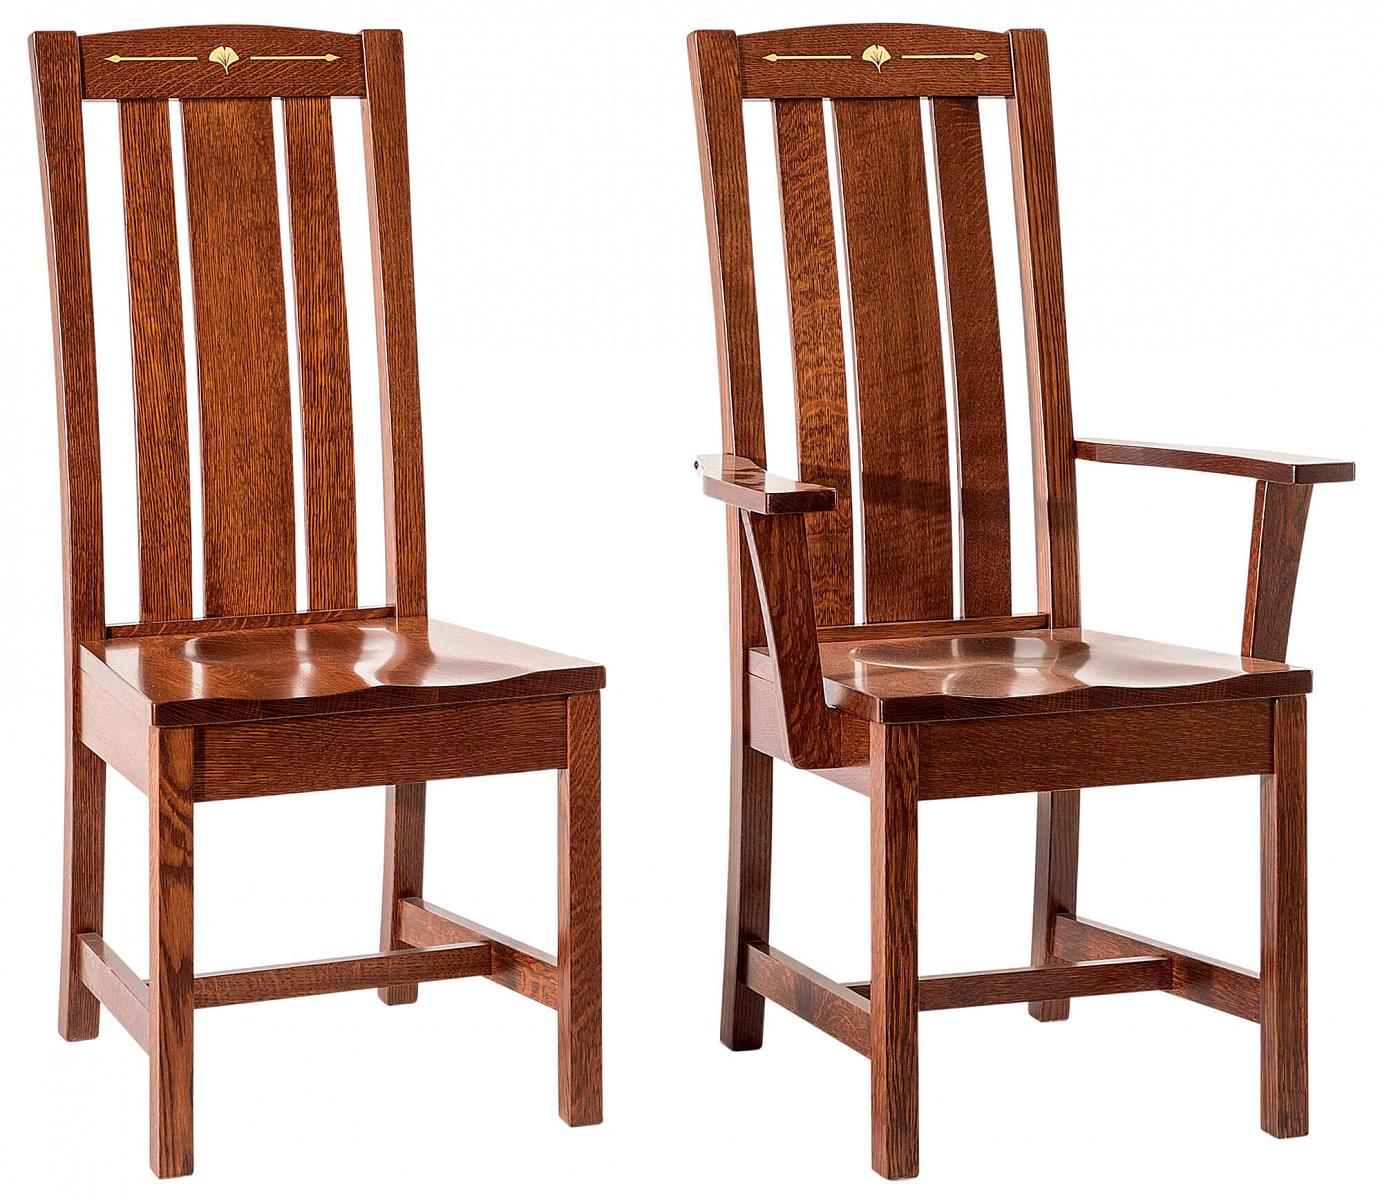 RH Yoder Mesa Chairs